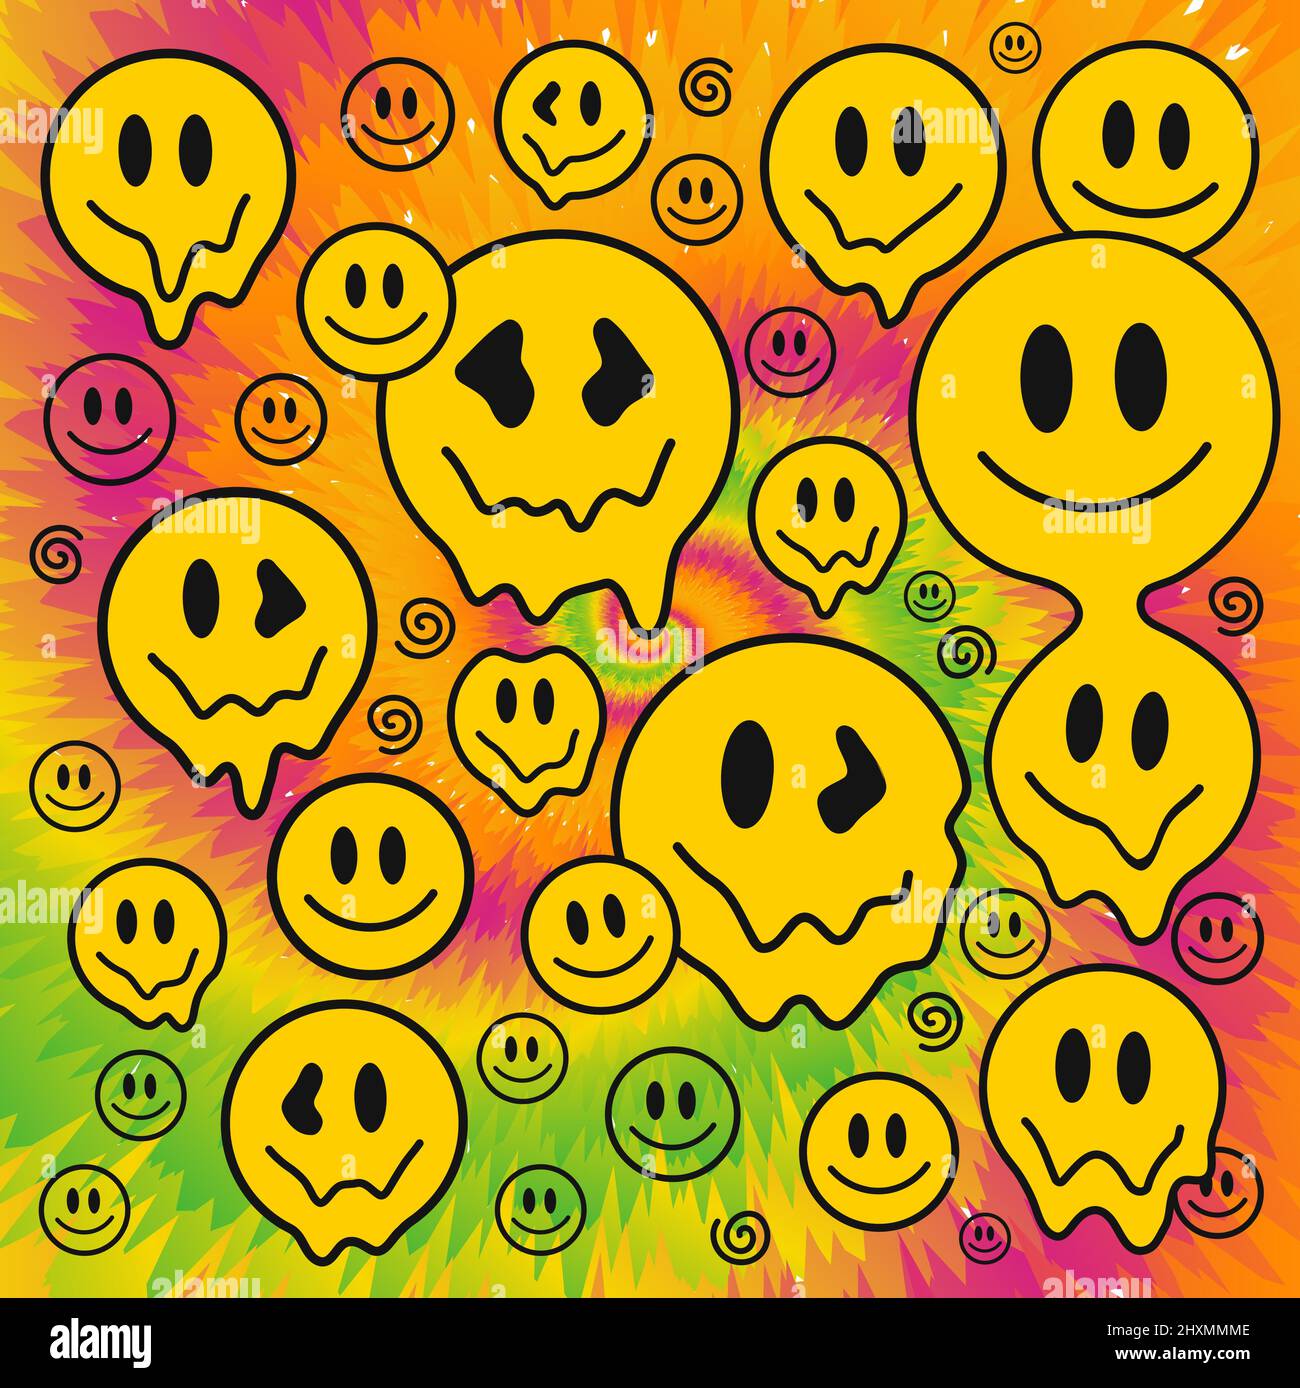 Crazy Melt Smile Faces Tie Dye Background Vector Tie Dye Crazy Cartoon Character Illustration Smile Faces 60s Melting Acid Trippy Tiedye Backgroun Pattern Wallpaper Print Concept Stock Vector Image Art Alamy